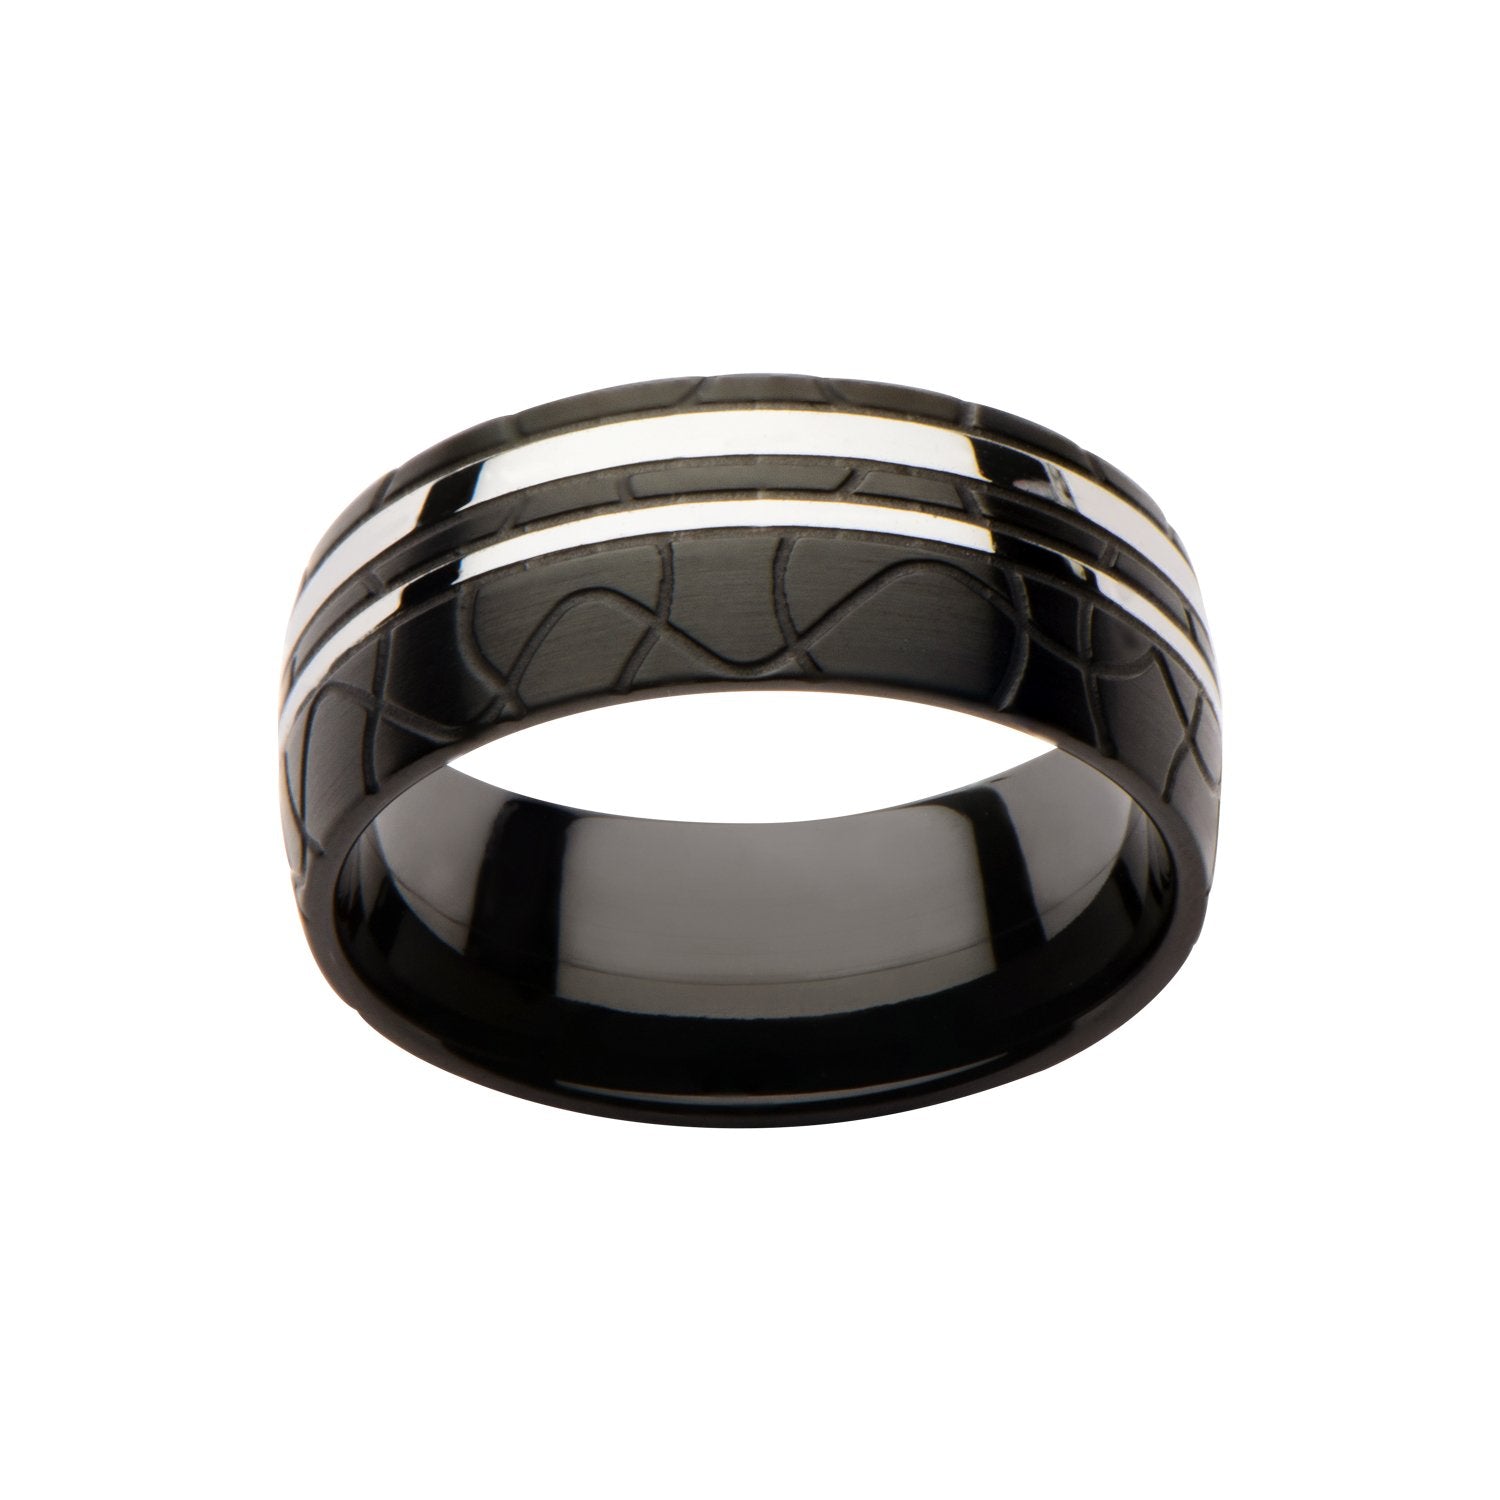 Mens Stainless Steel Black IP Patterned Stainless Steel Ring